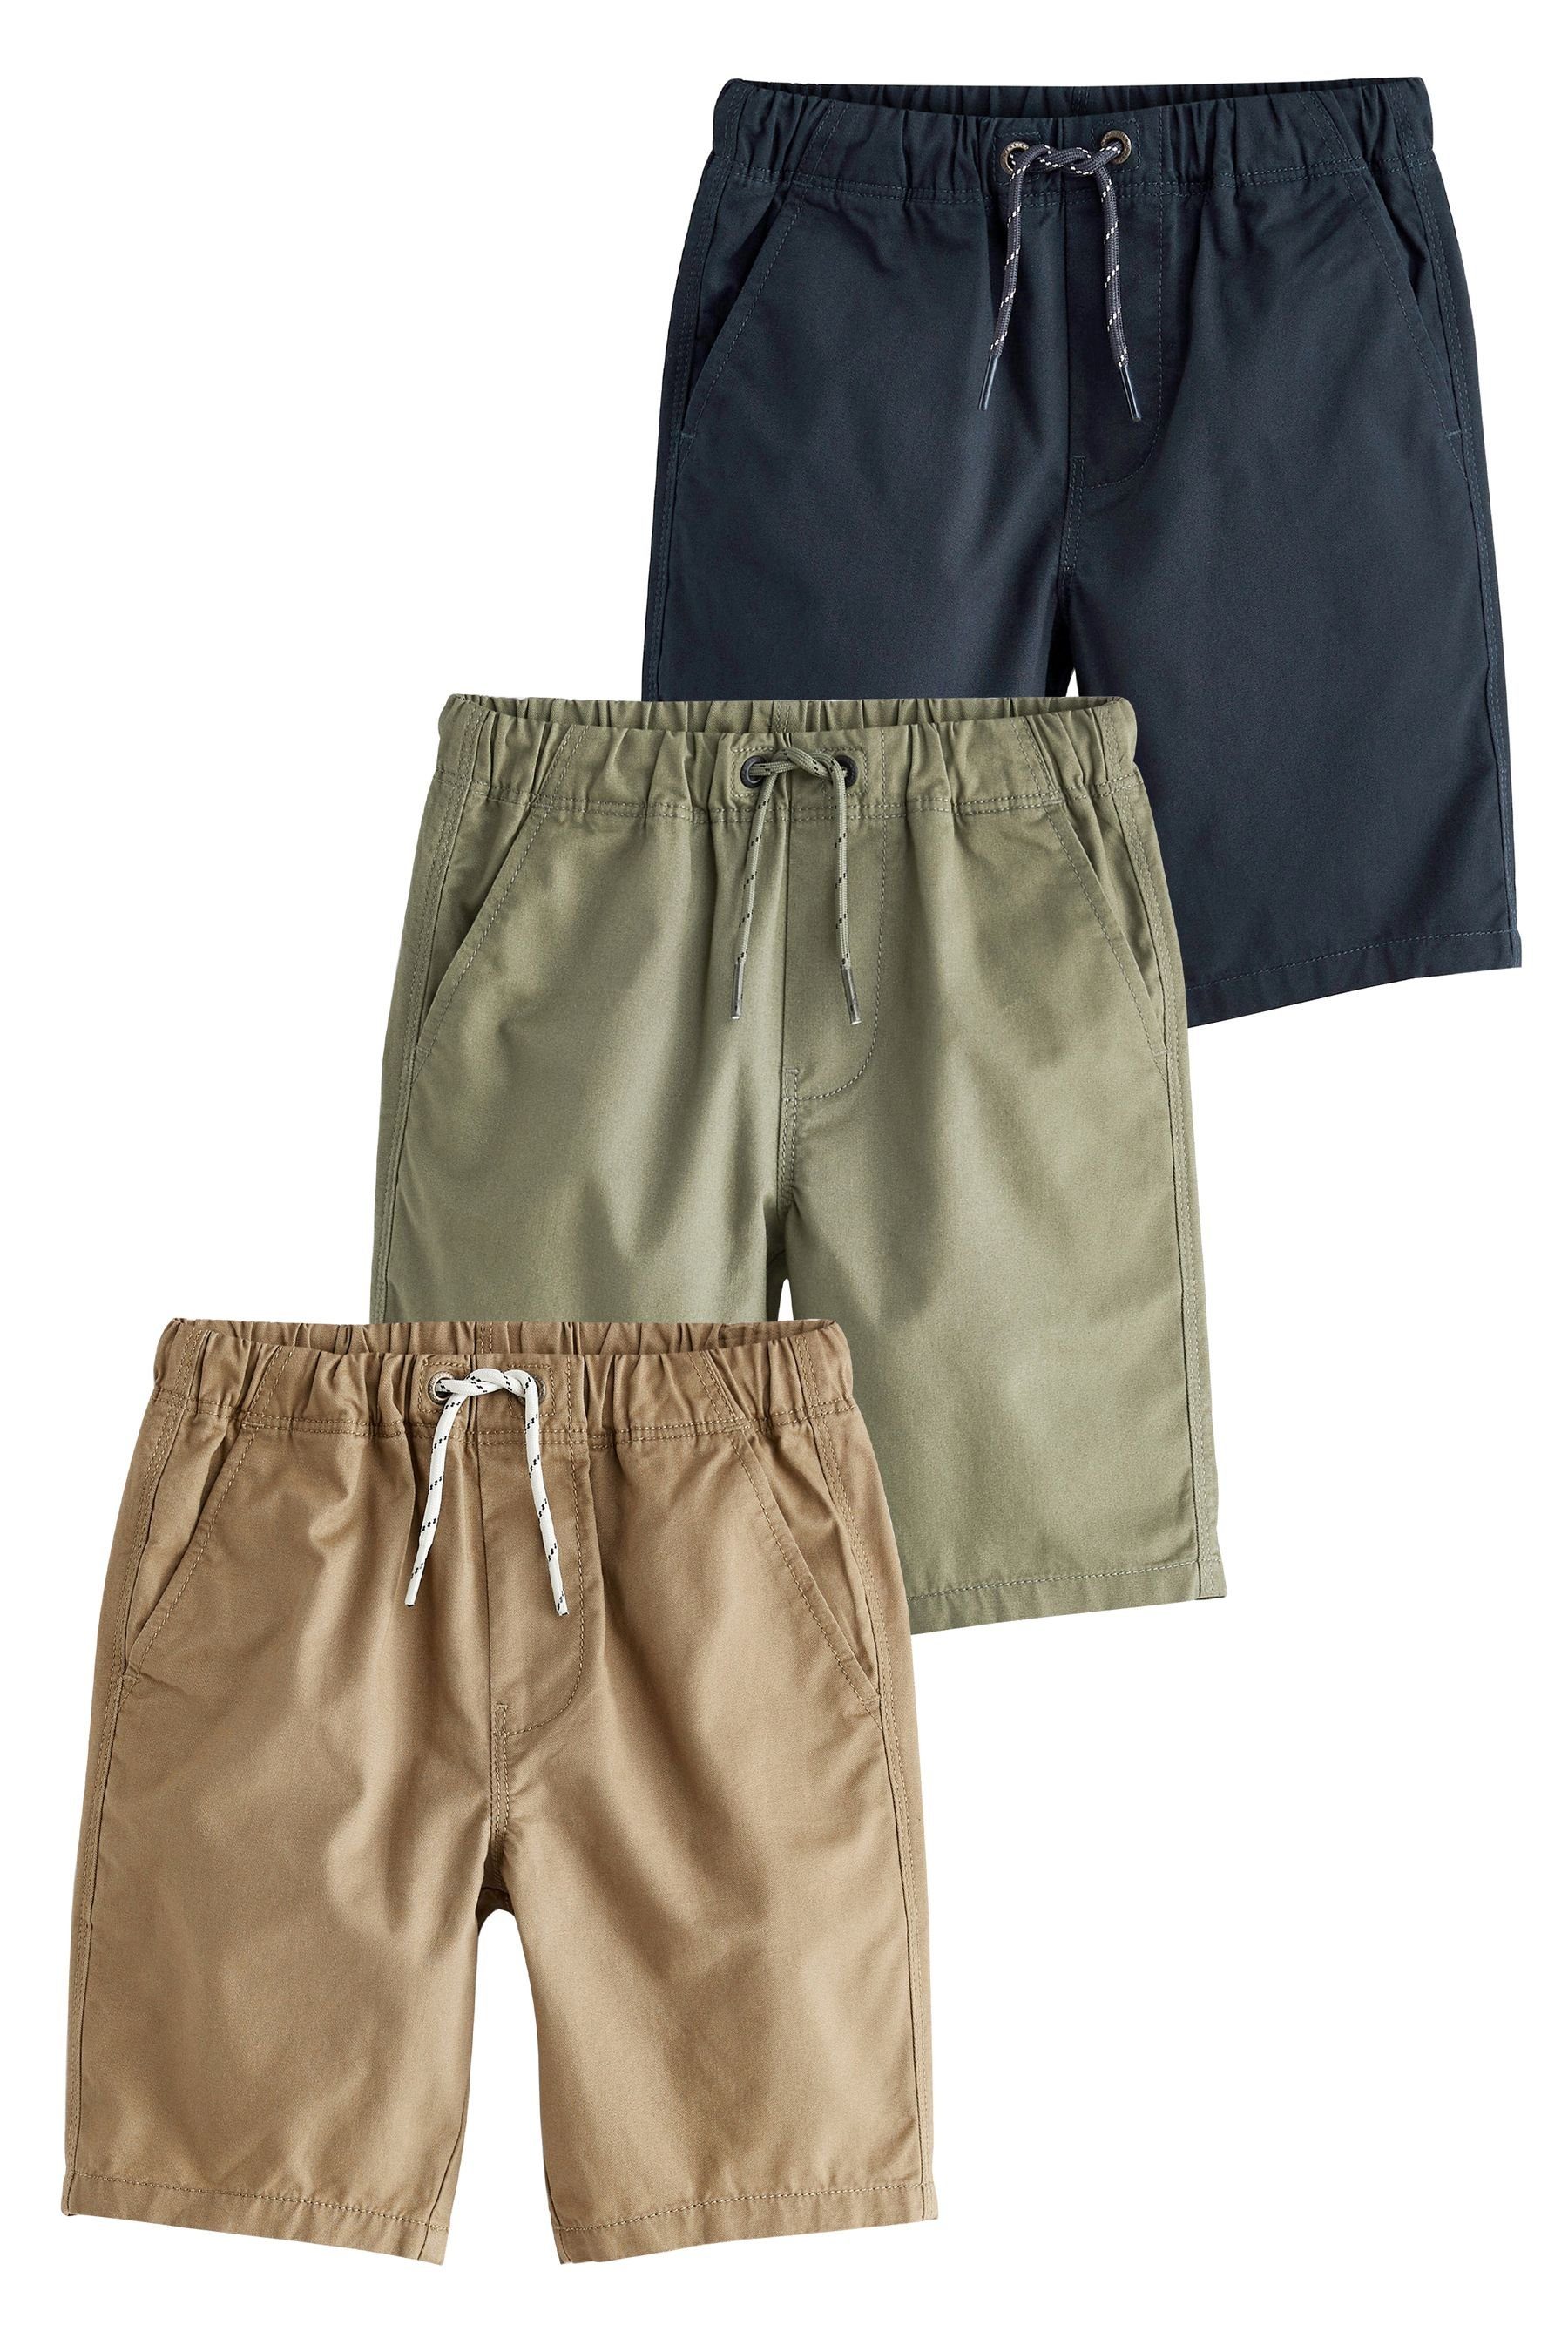 Khaki Green/Tan im Shorts 3er-Pack (3-tlg) Brown Schlupf-Shorts Next